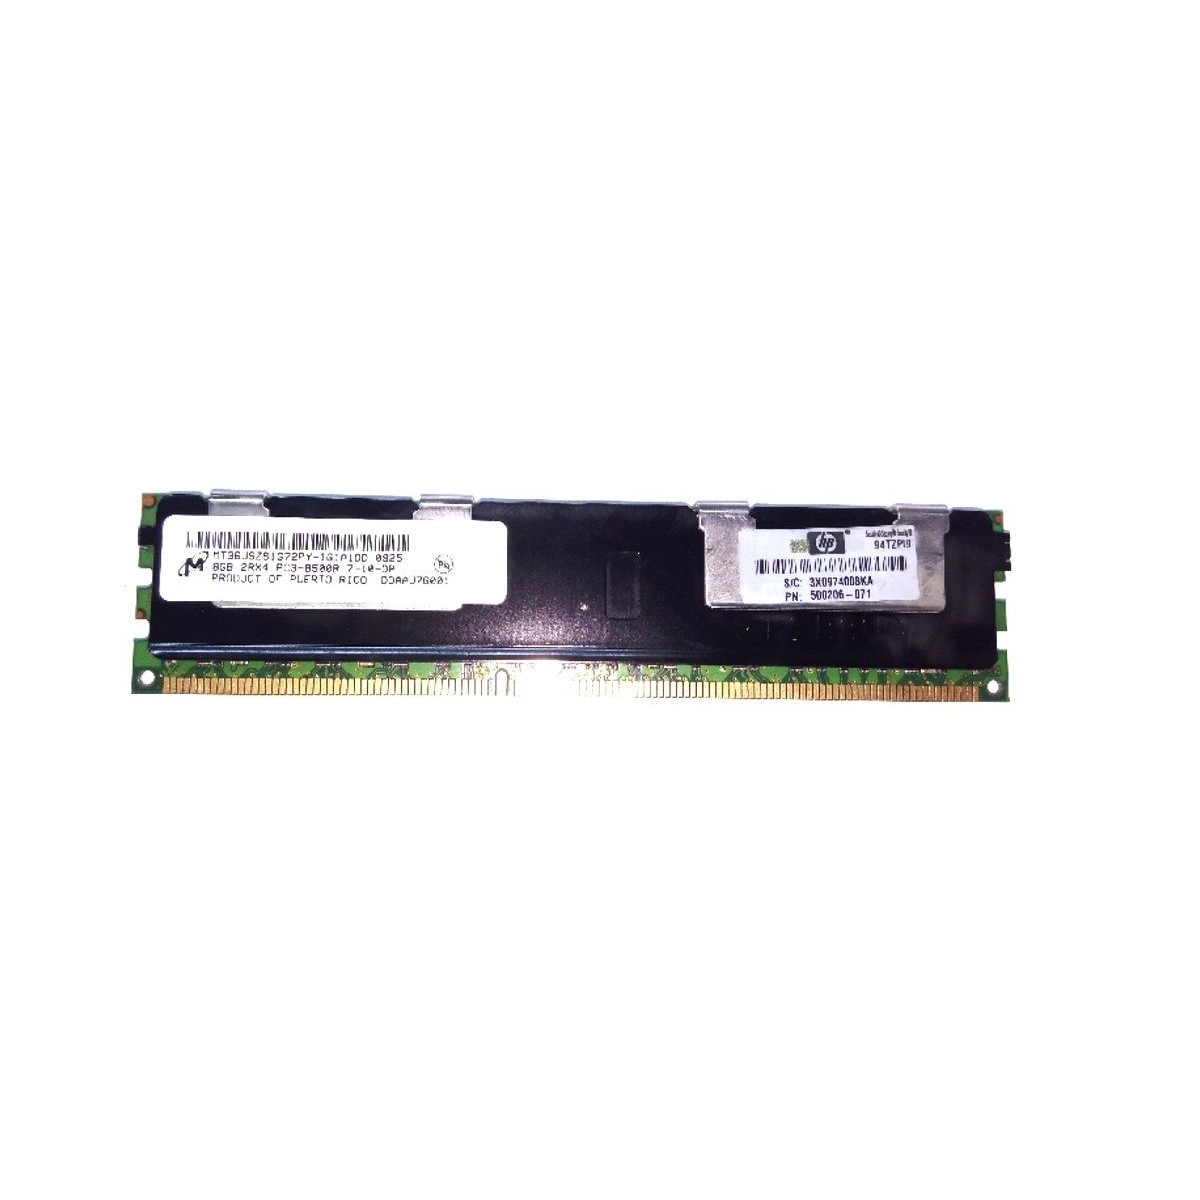 PAMIEC HP MICRON 8GB 2Rx4 PC3-8500R 500206-071